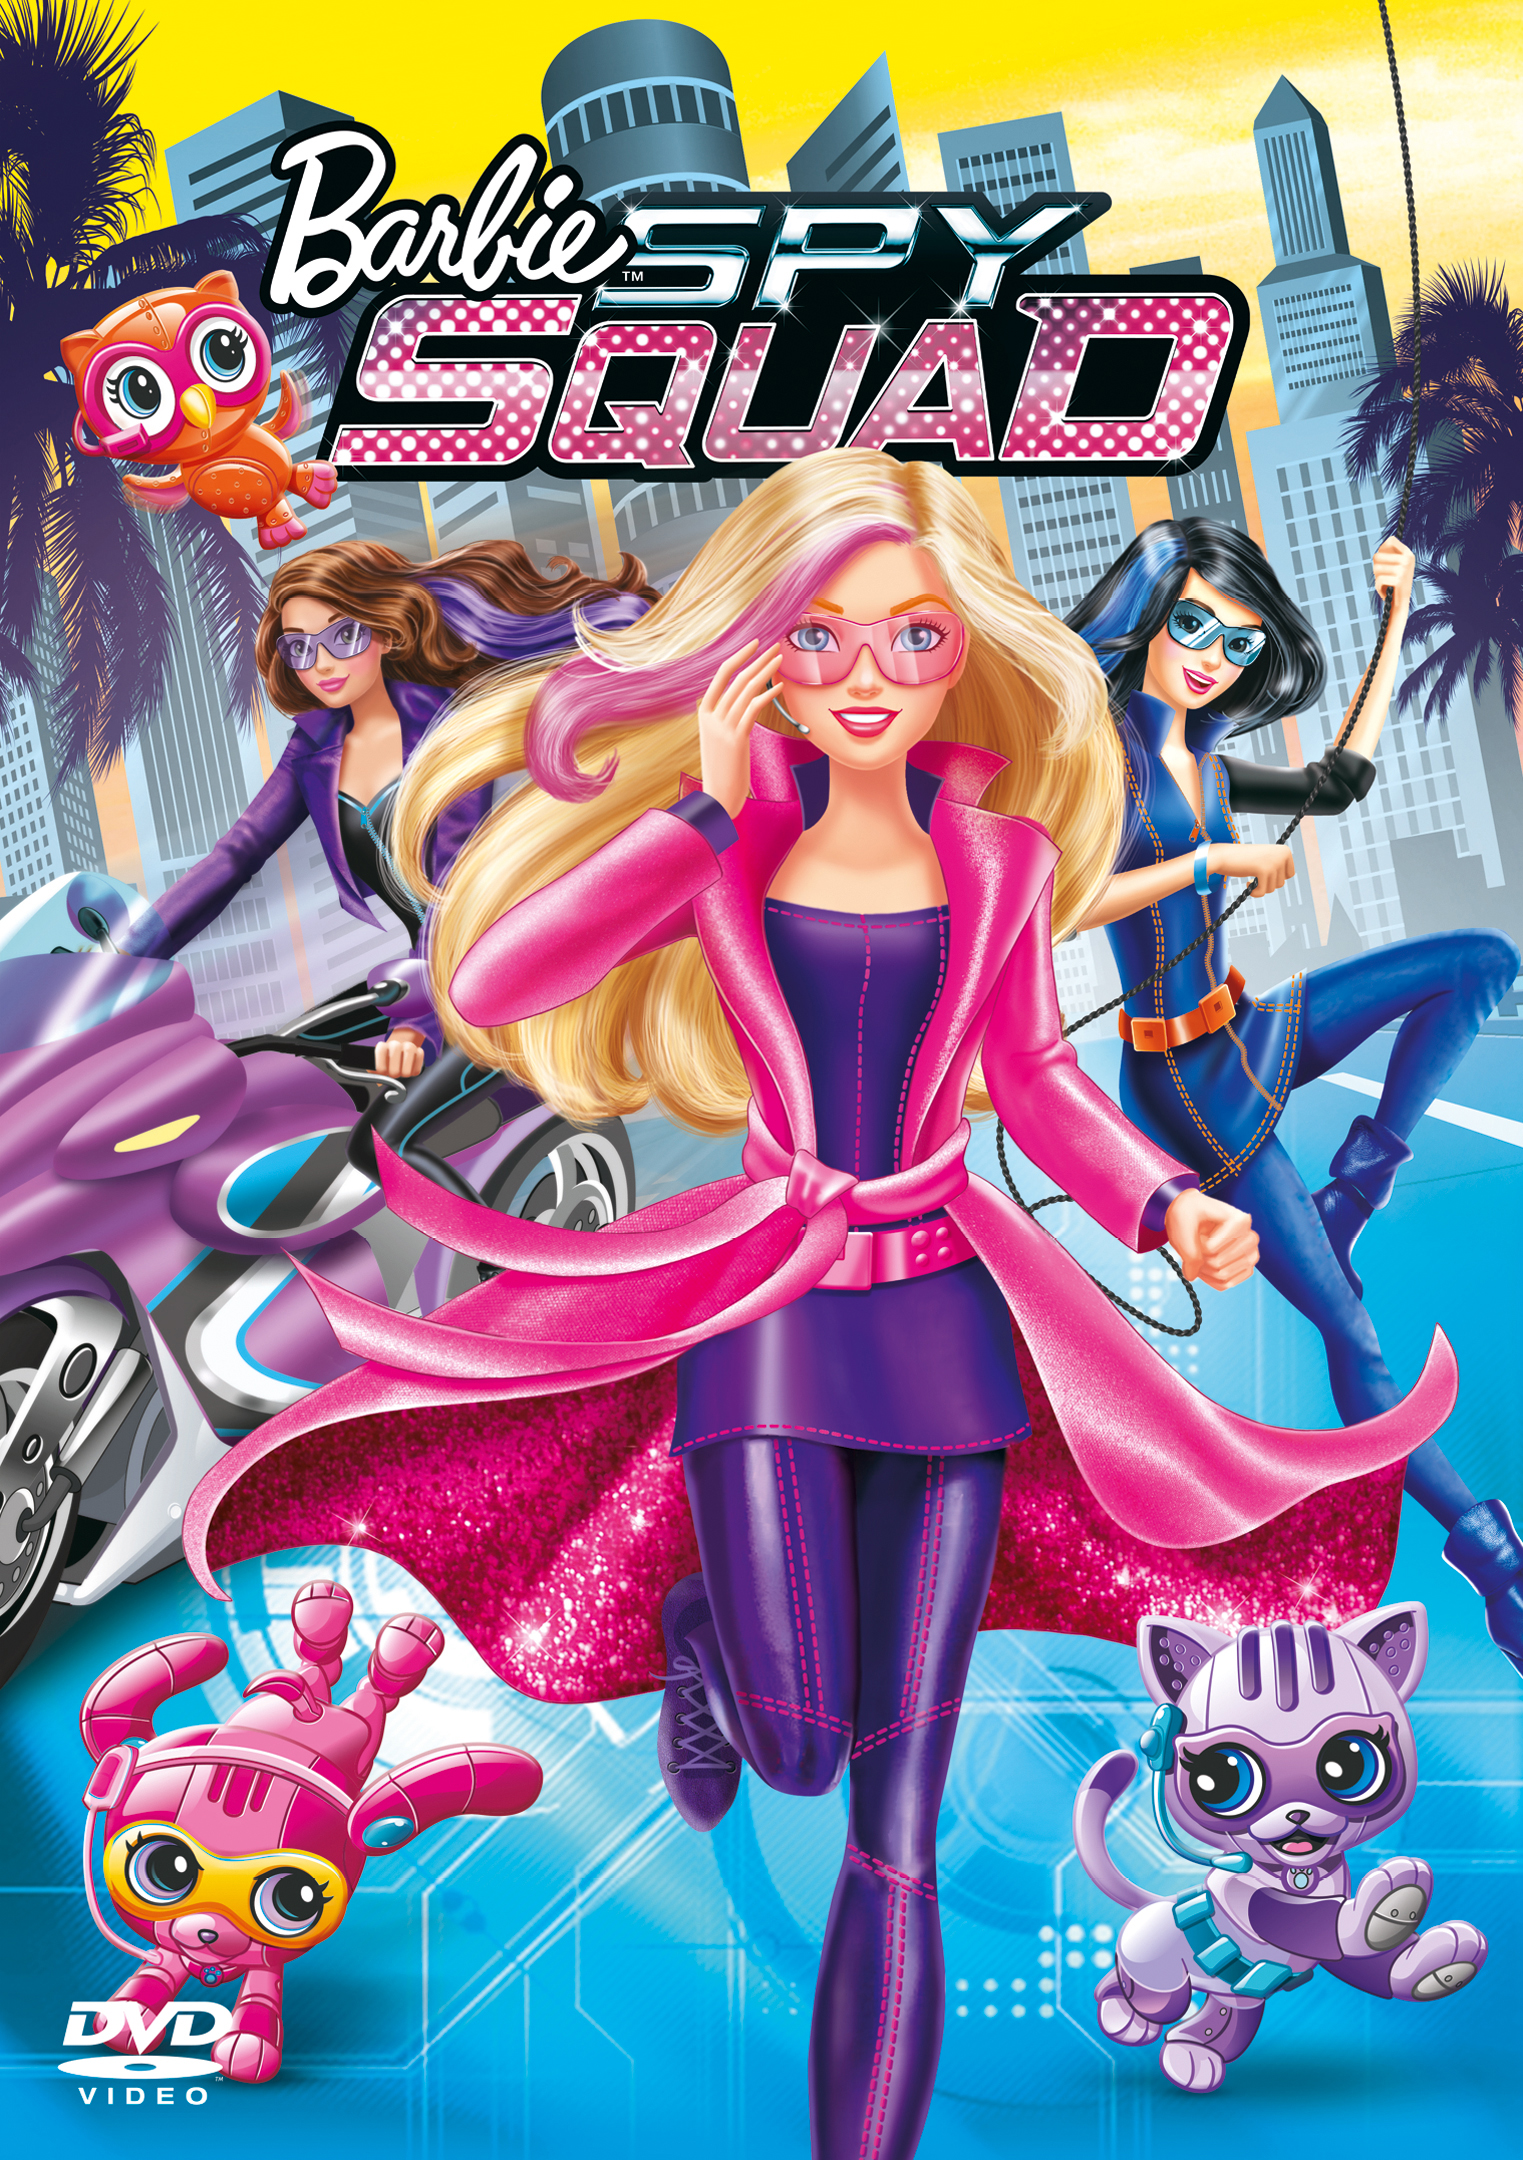 Nonton film Barbie Spy Squad layarkaca21 indoxx1 ganool online streaming terbaru